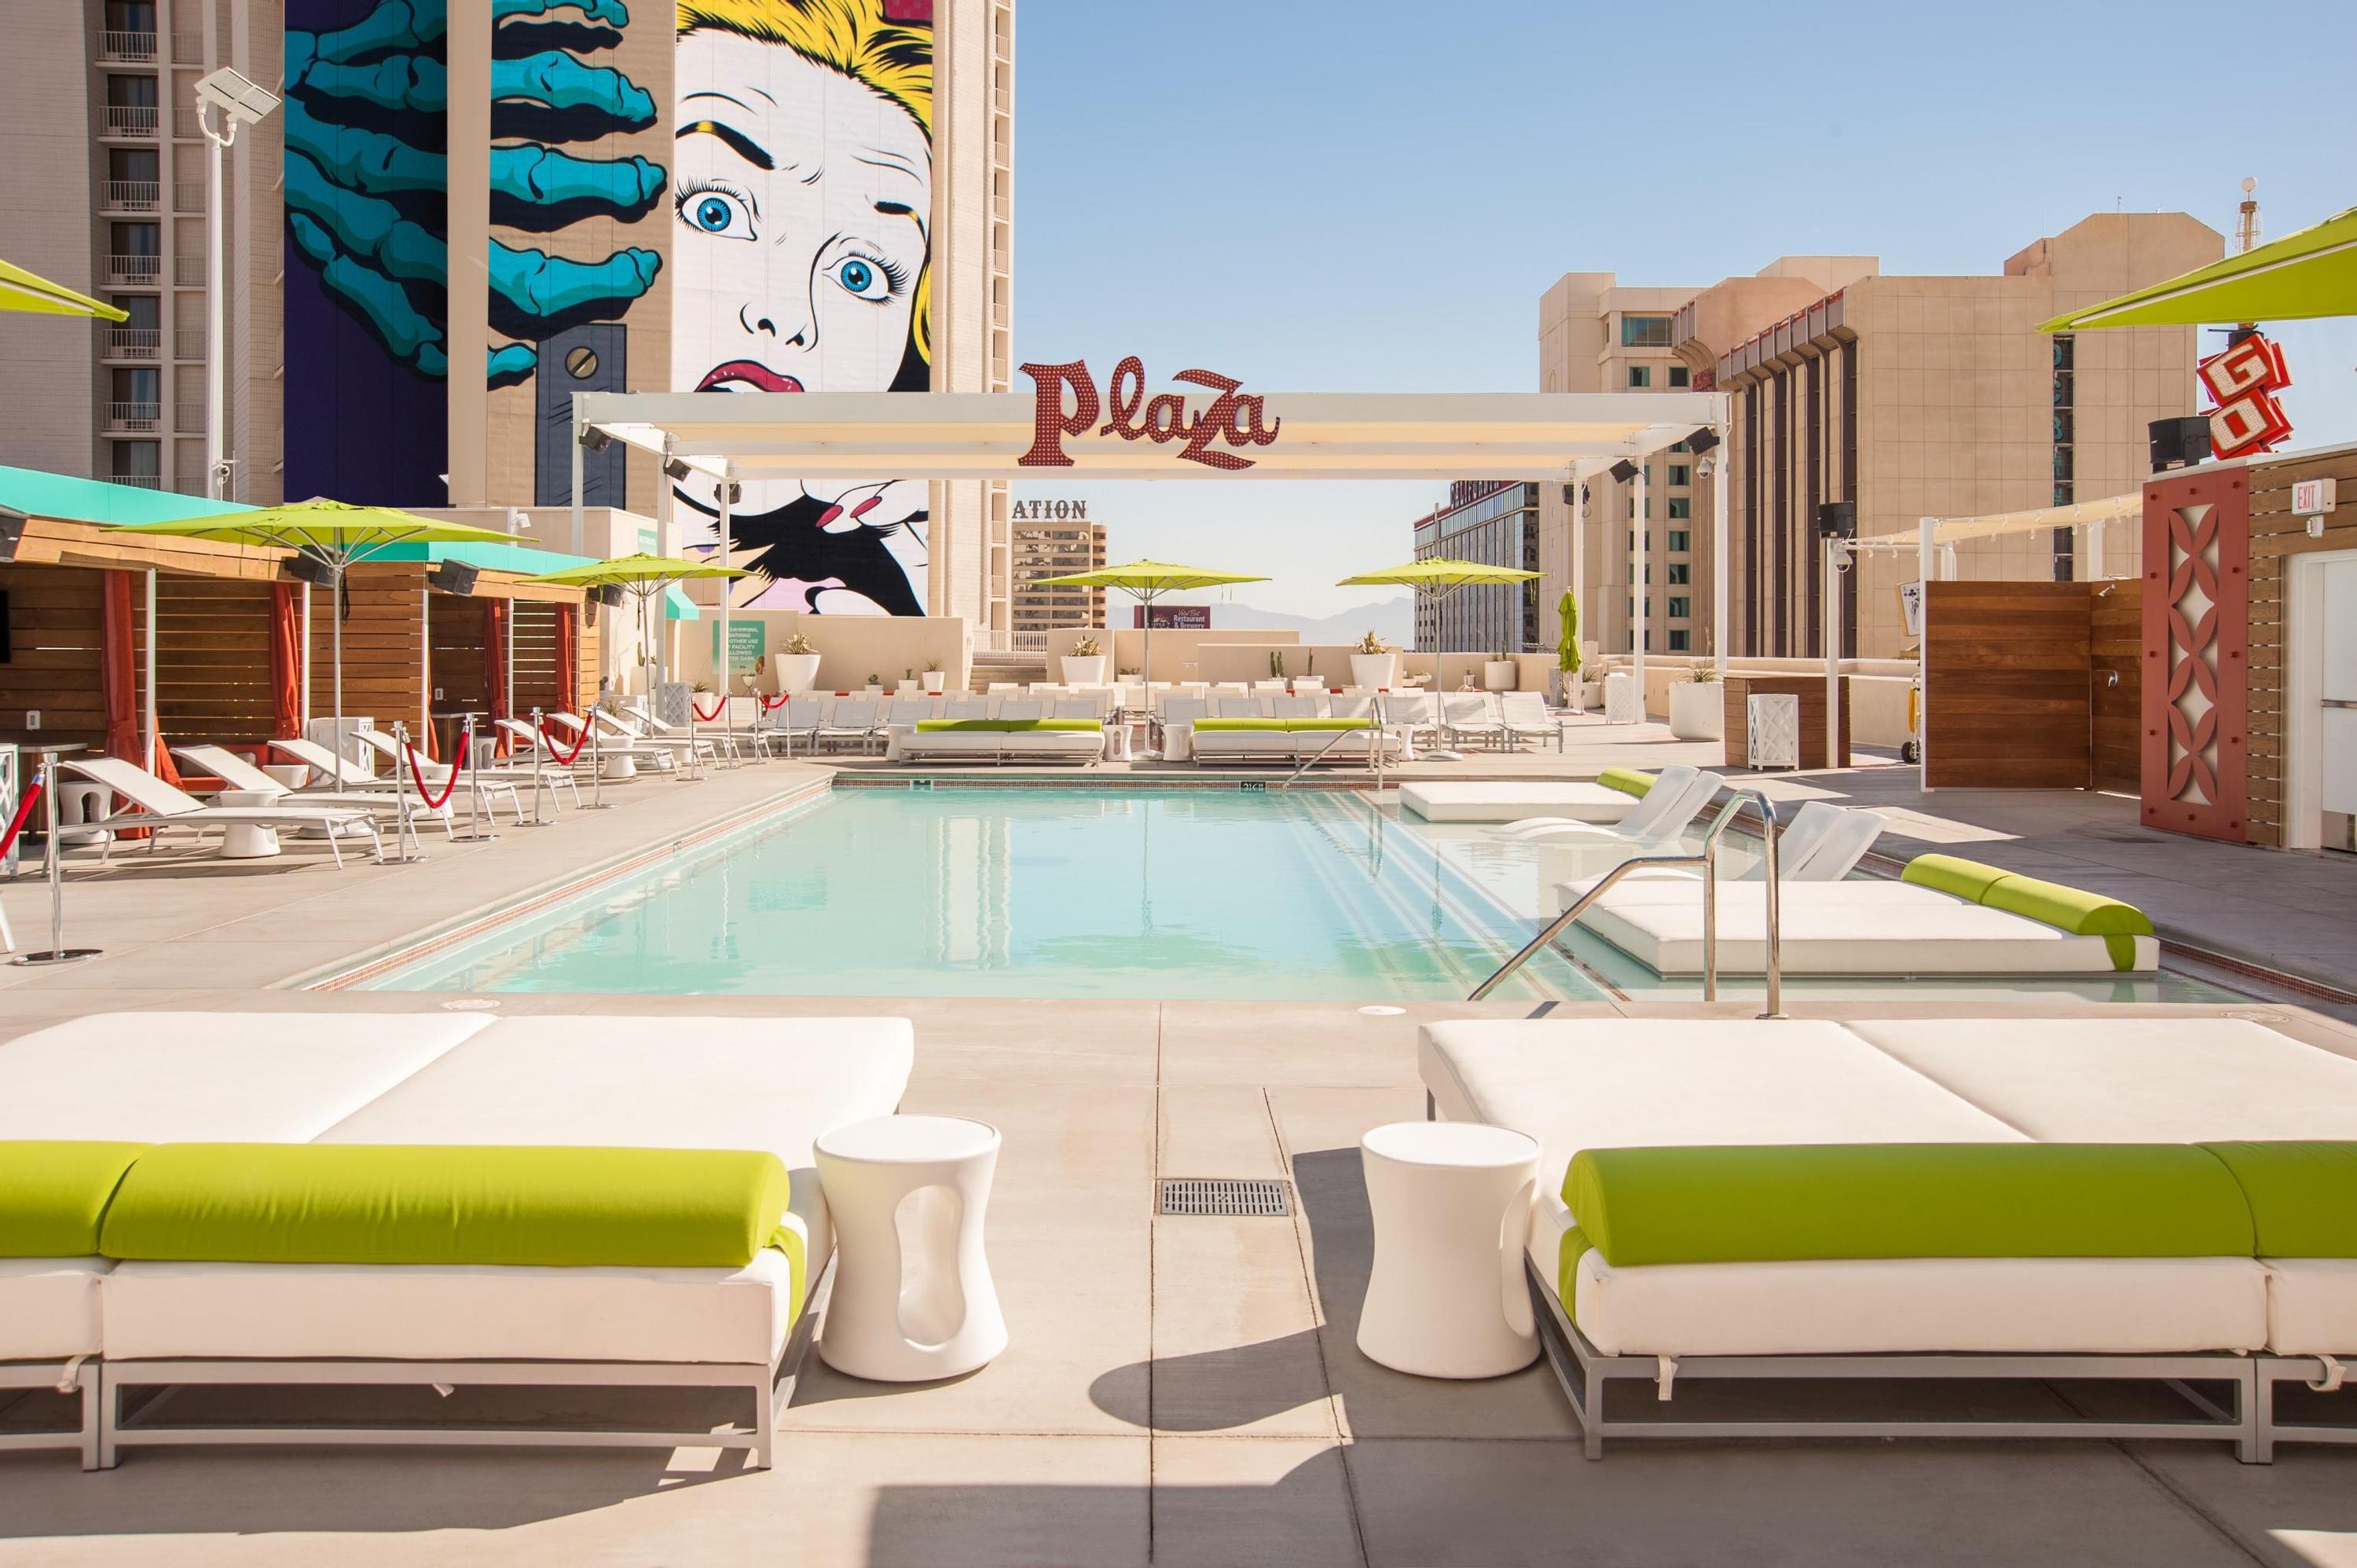 16 Best Hotels in Las Vegas. Hotel Deals from £37/night - KAYAK